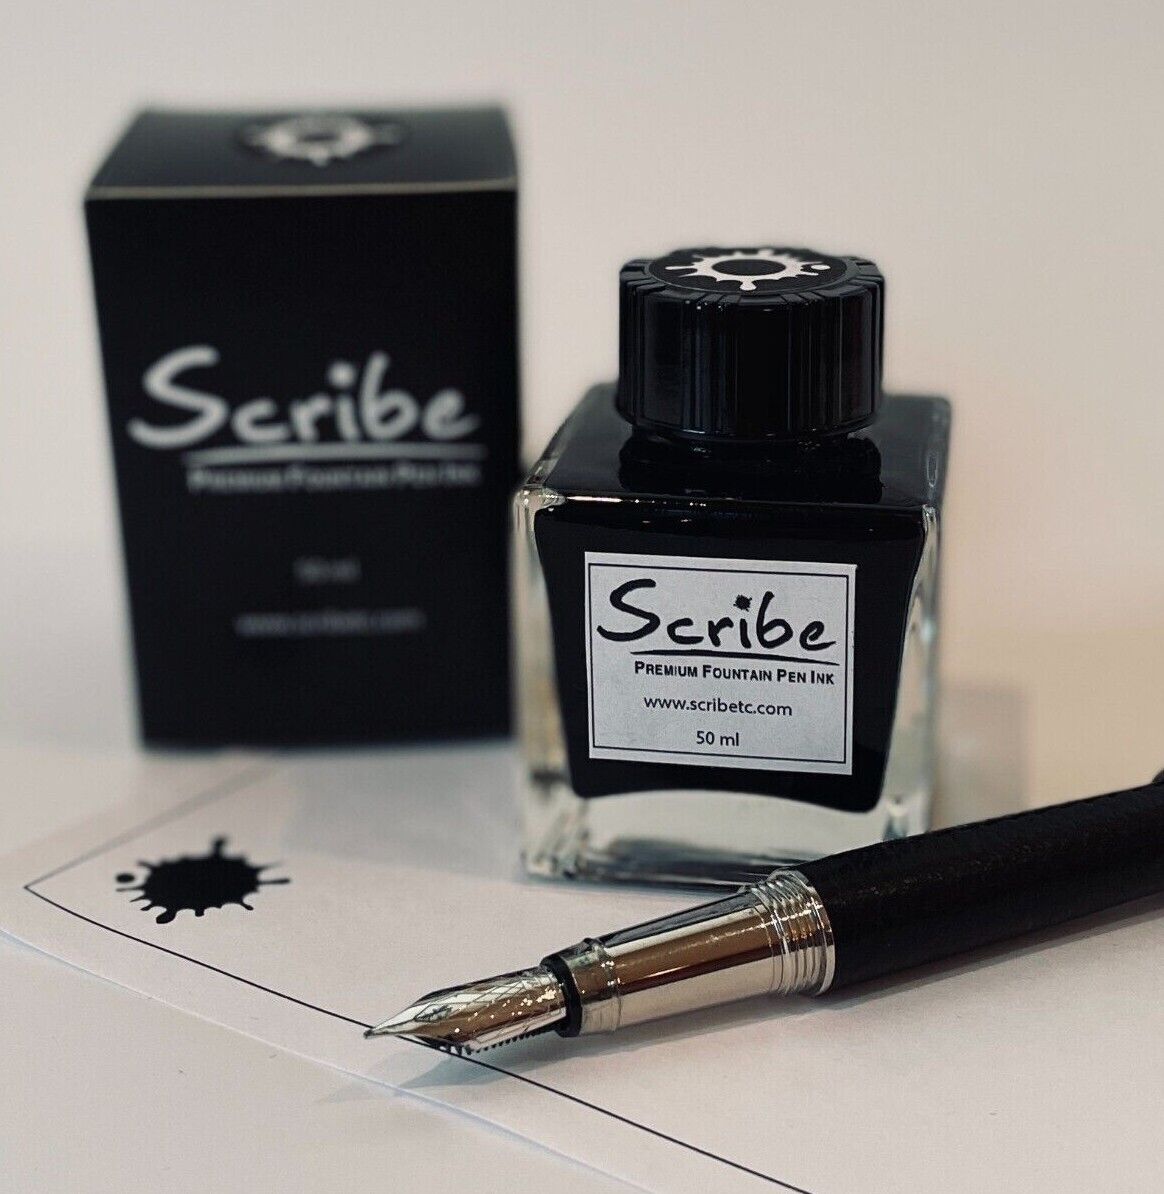 Scribe Premium Fountain Pen inks, reminiscent of Parker Penman inks. New, Fresh